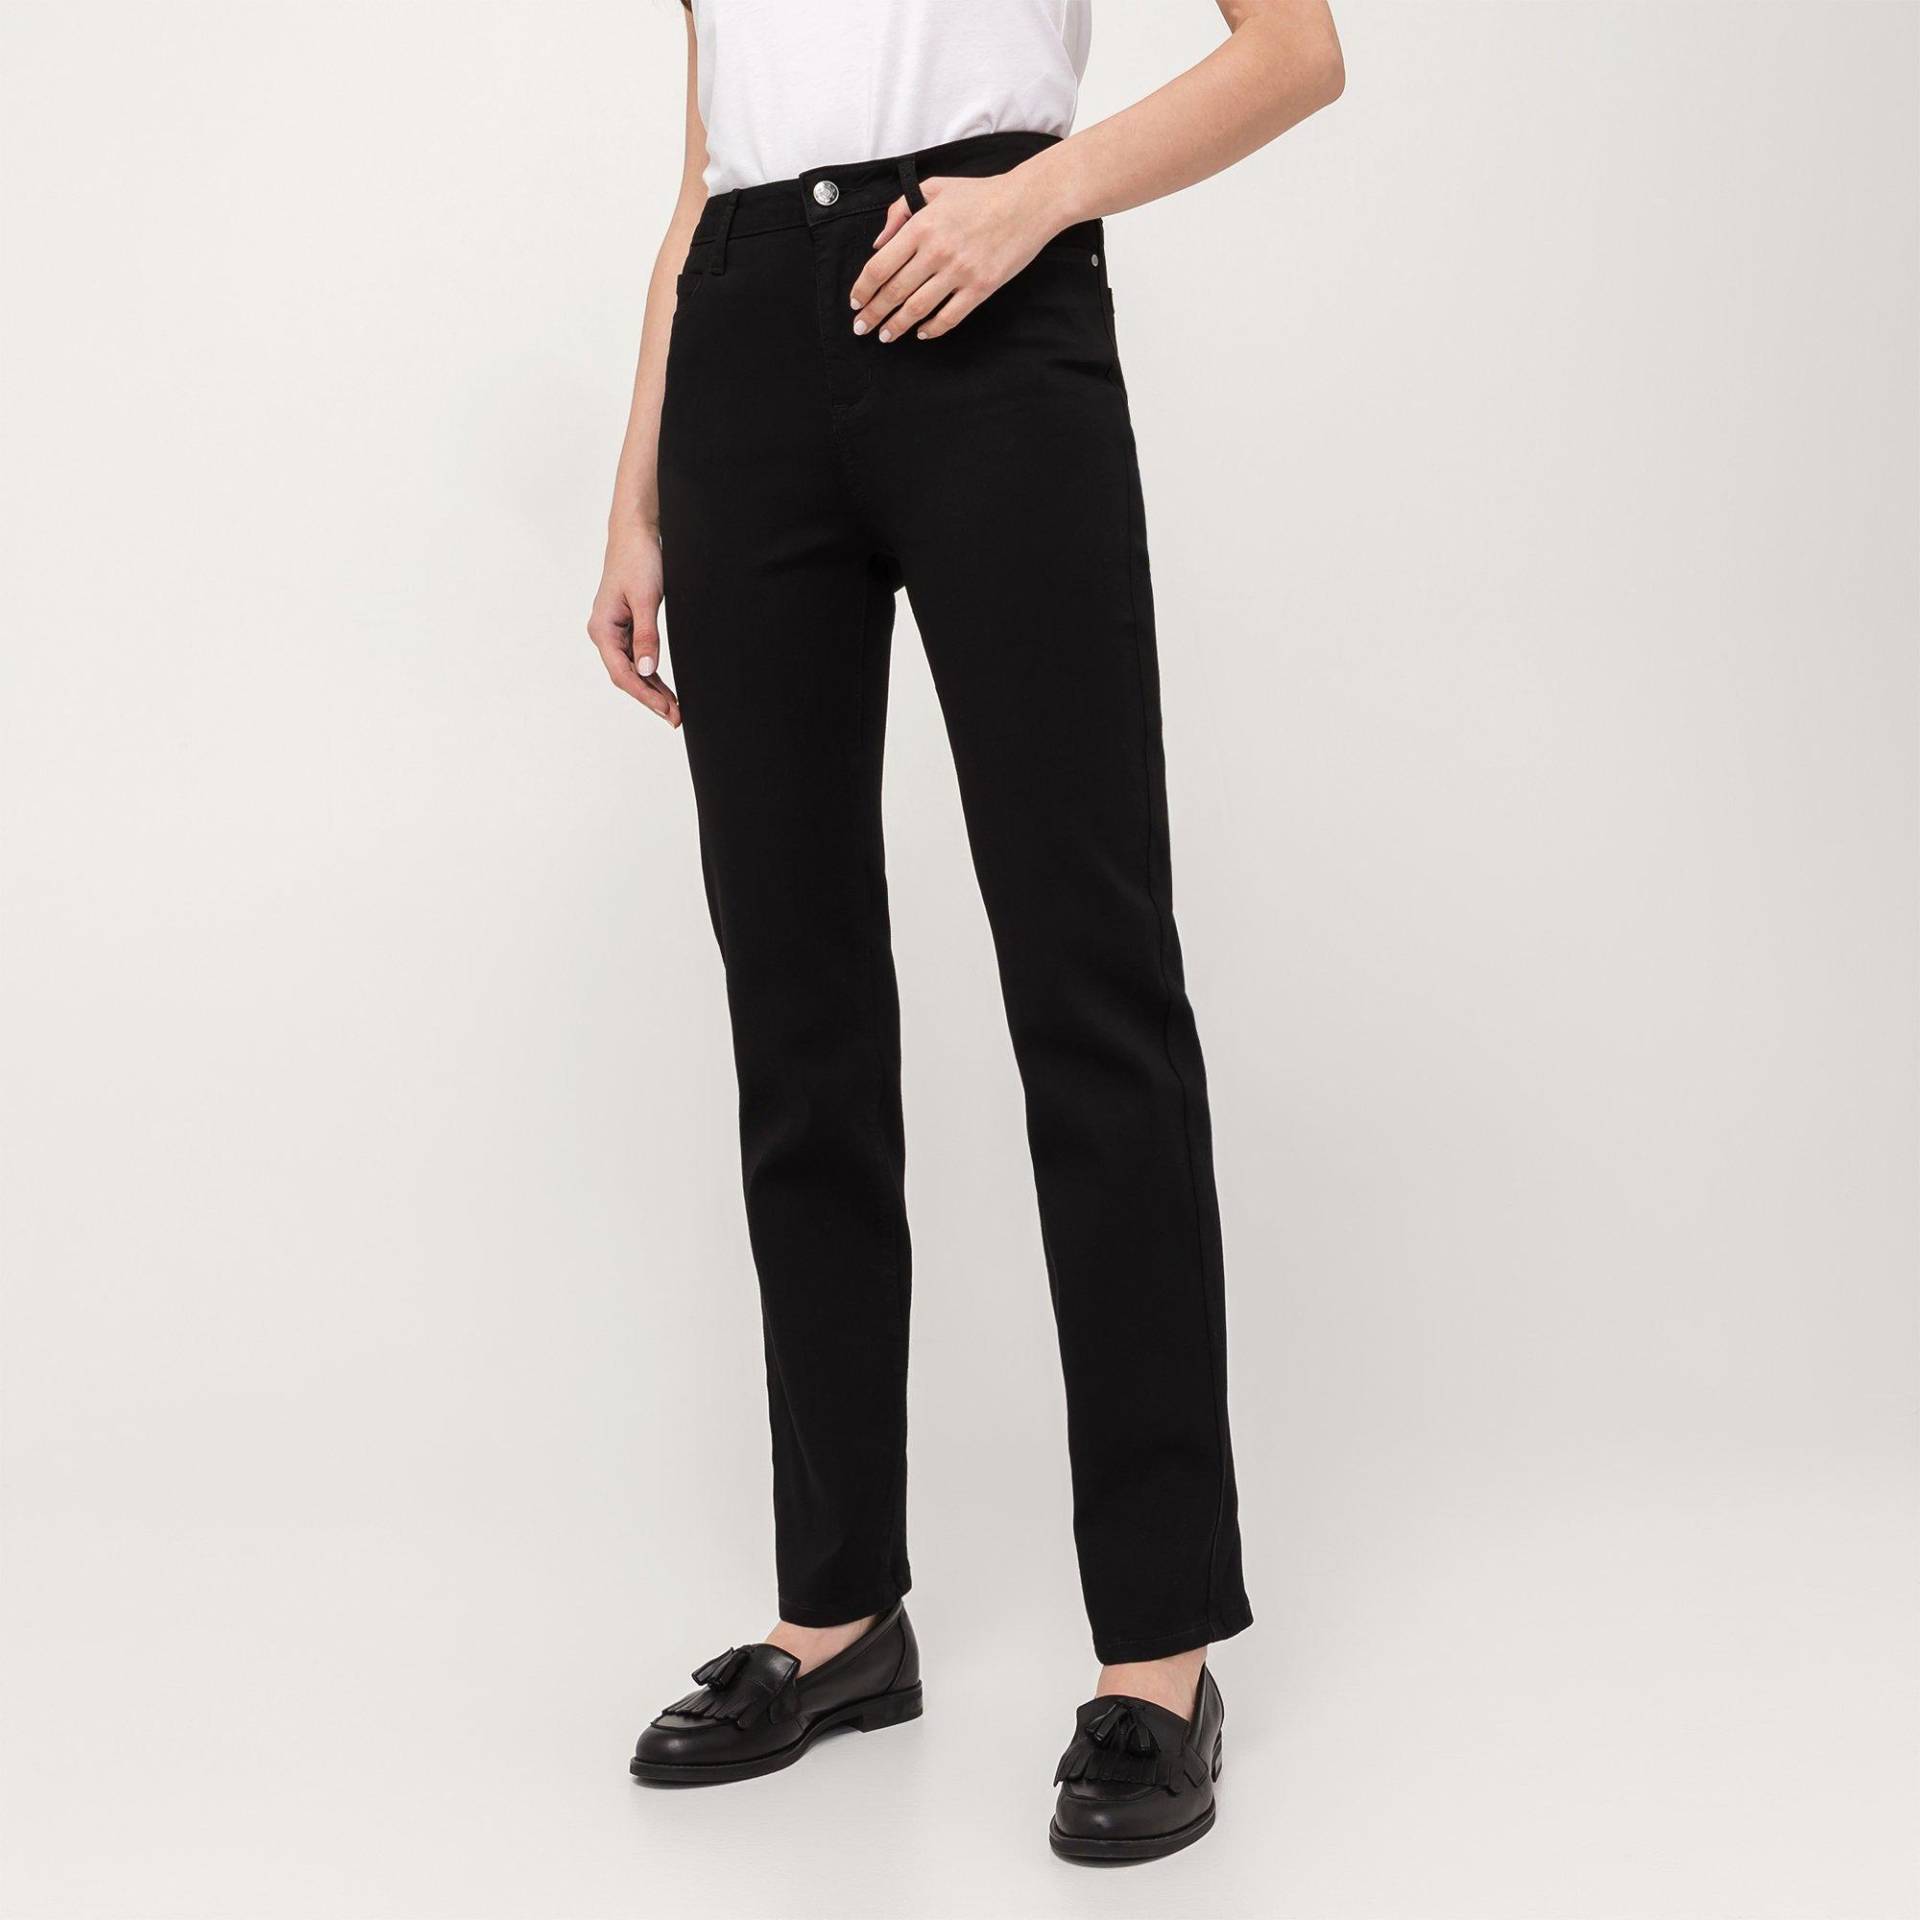 Jeans, Straight Leg Fit Damen Black L30/W38 von Manor Woman